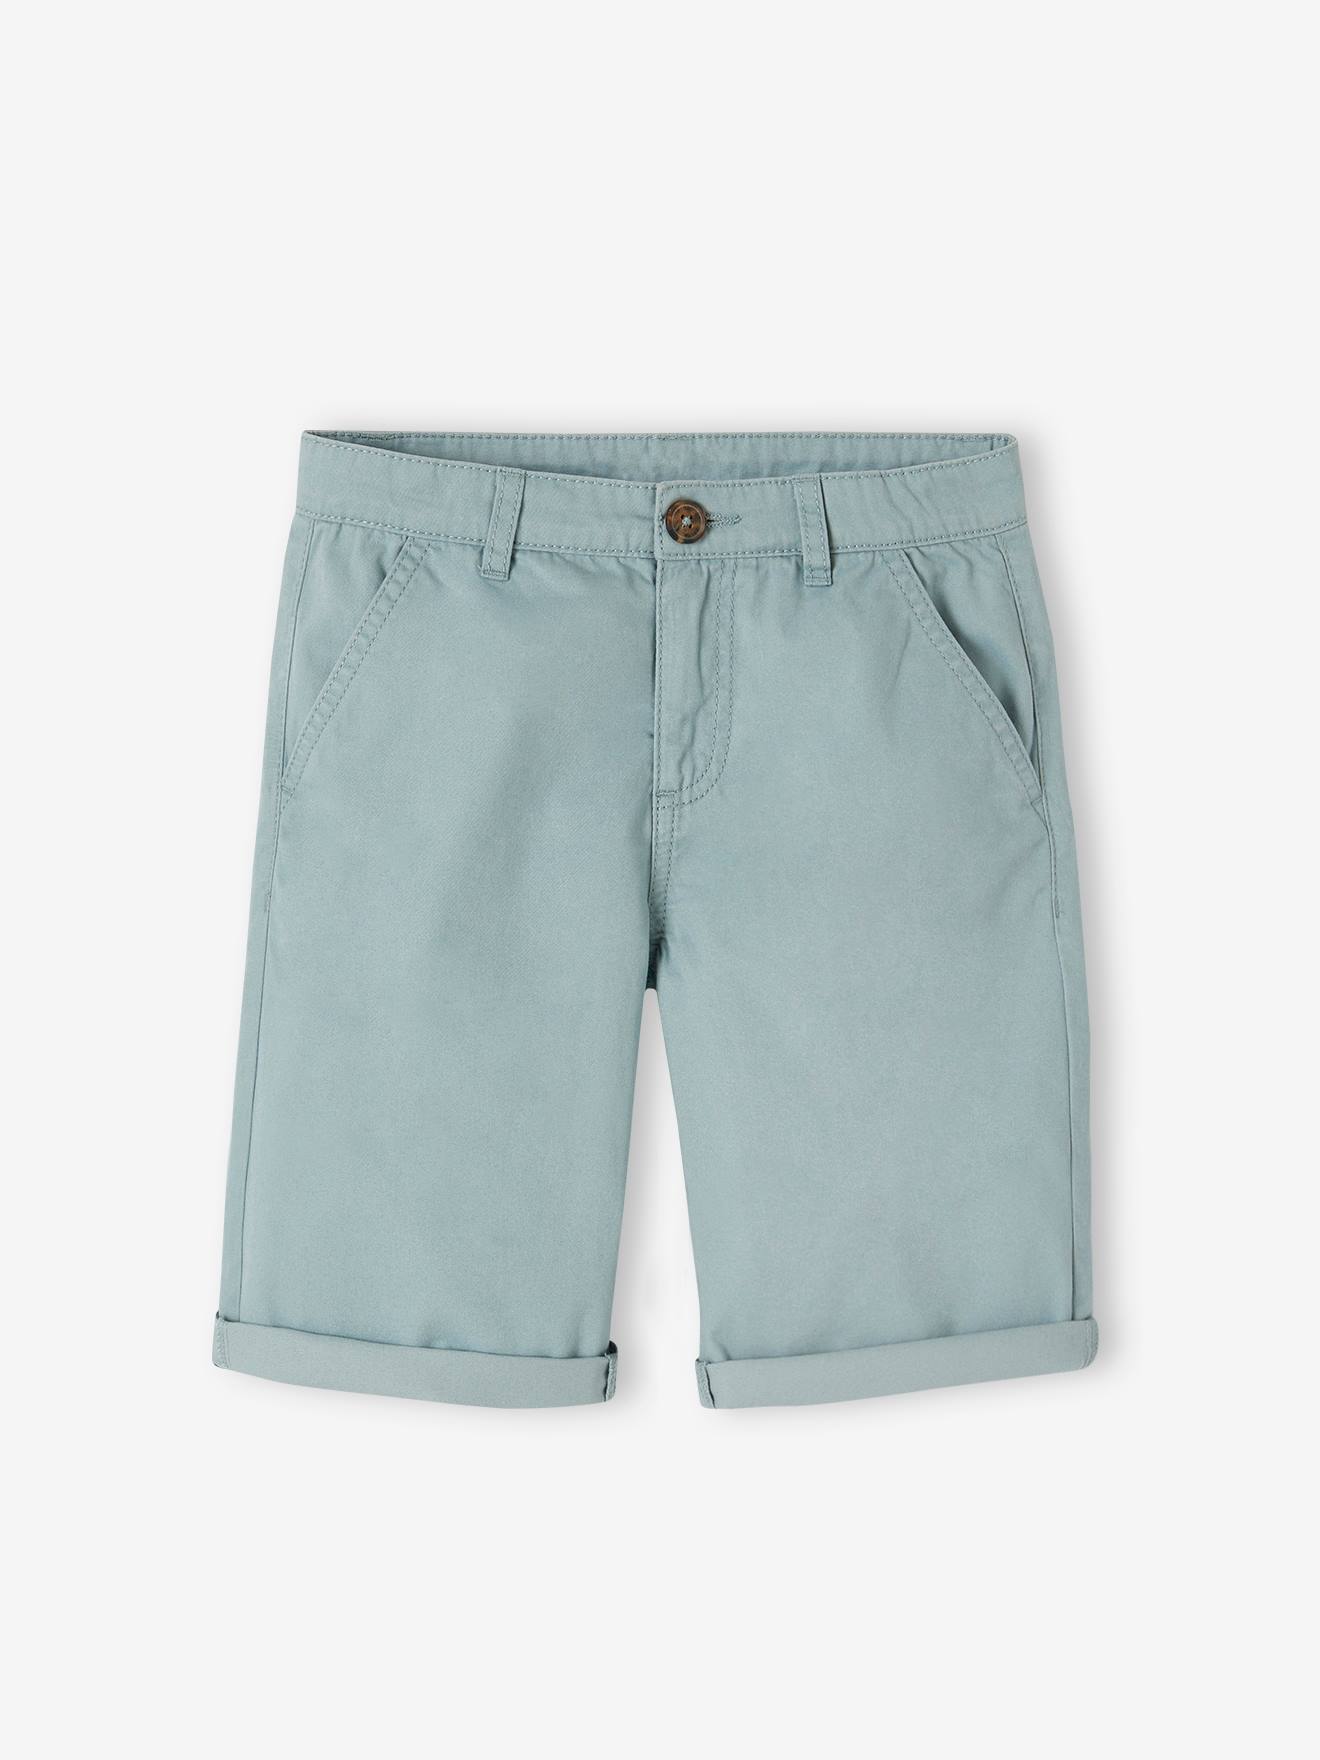 Chino Bermuda Shorts for Boys grey blue